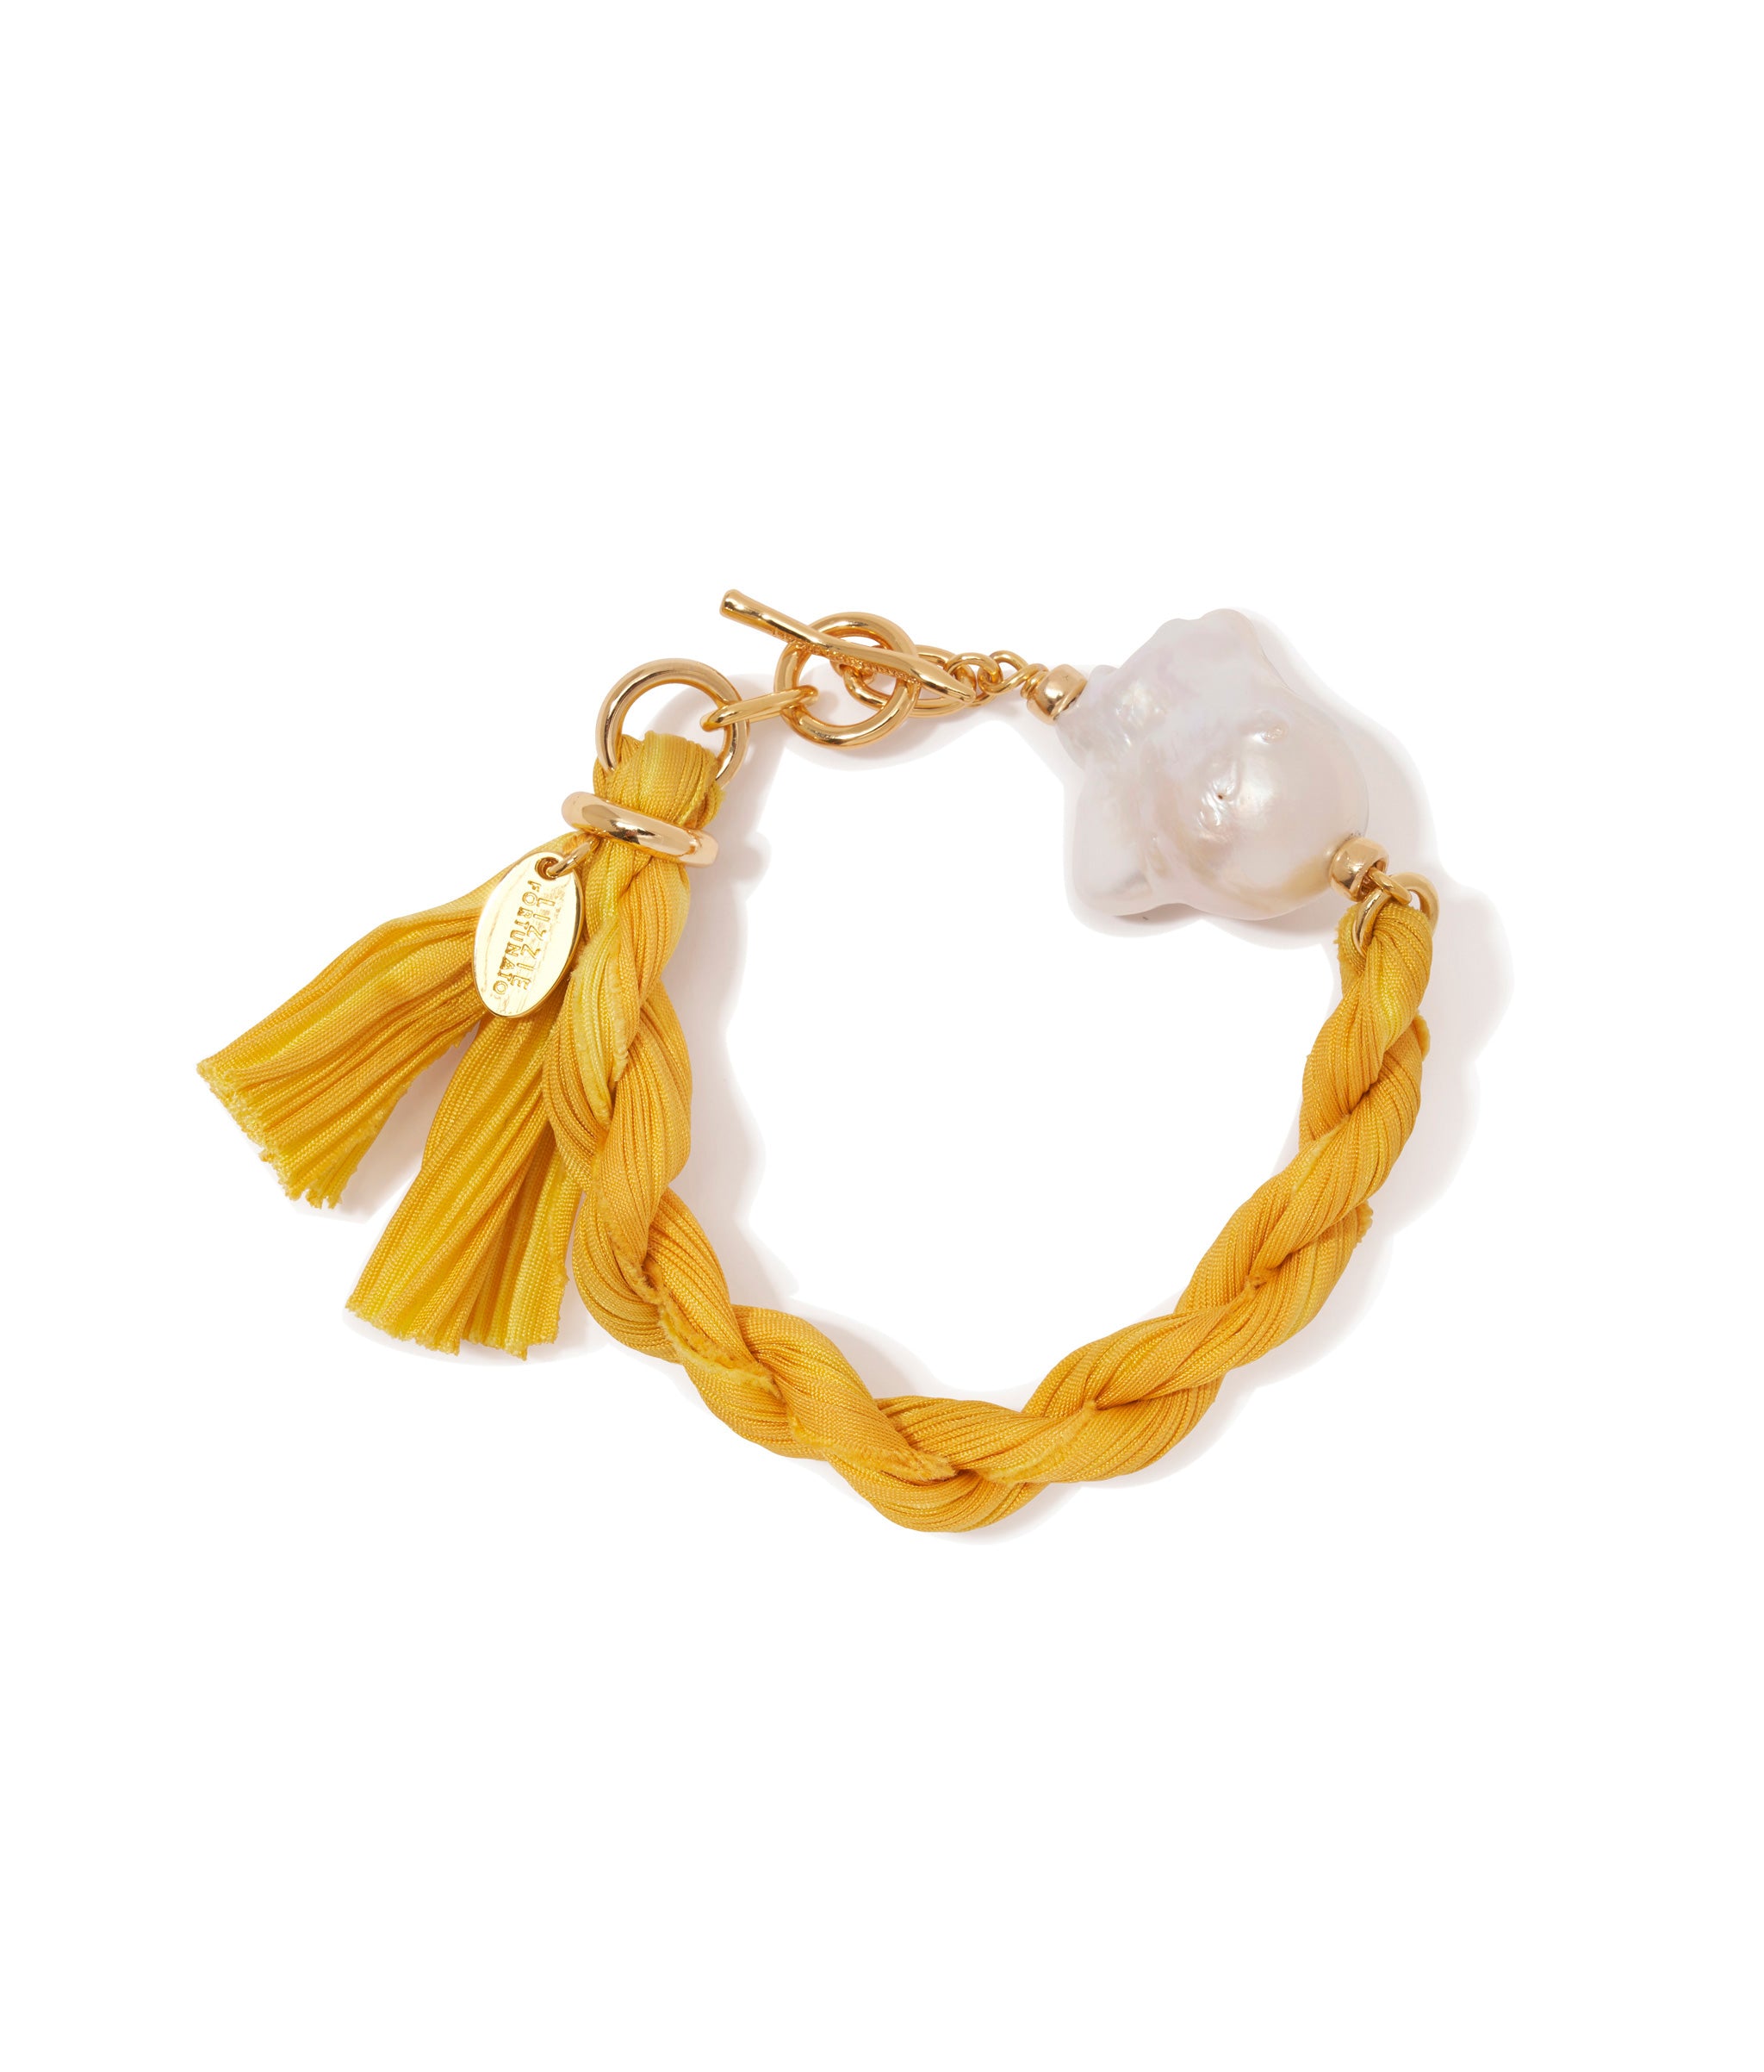 Shibori Ribbon Bracelet in Sun. Yellow shibori silk ribbon, large freshwater pearl and gold-plated toggle closure.